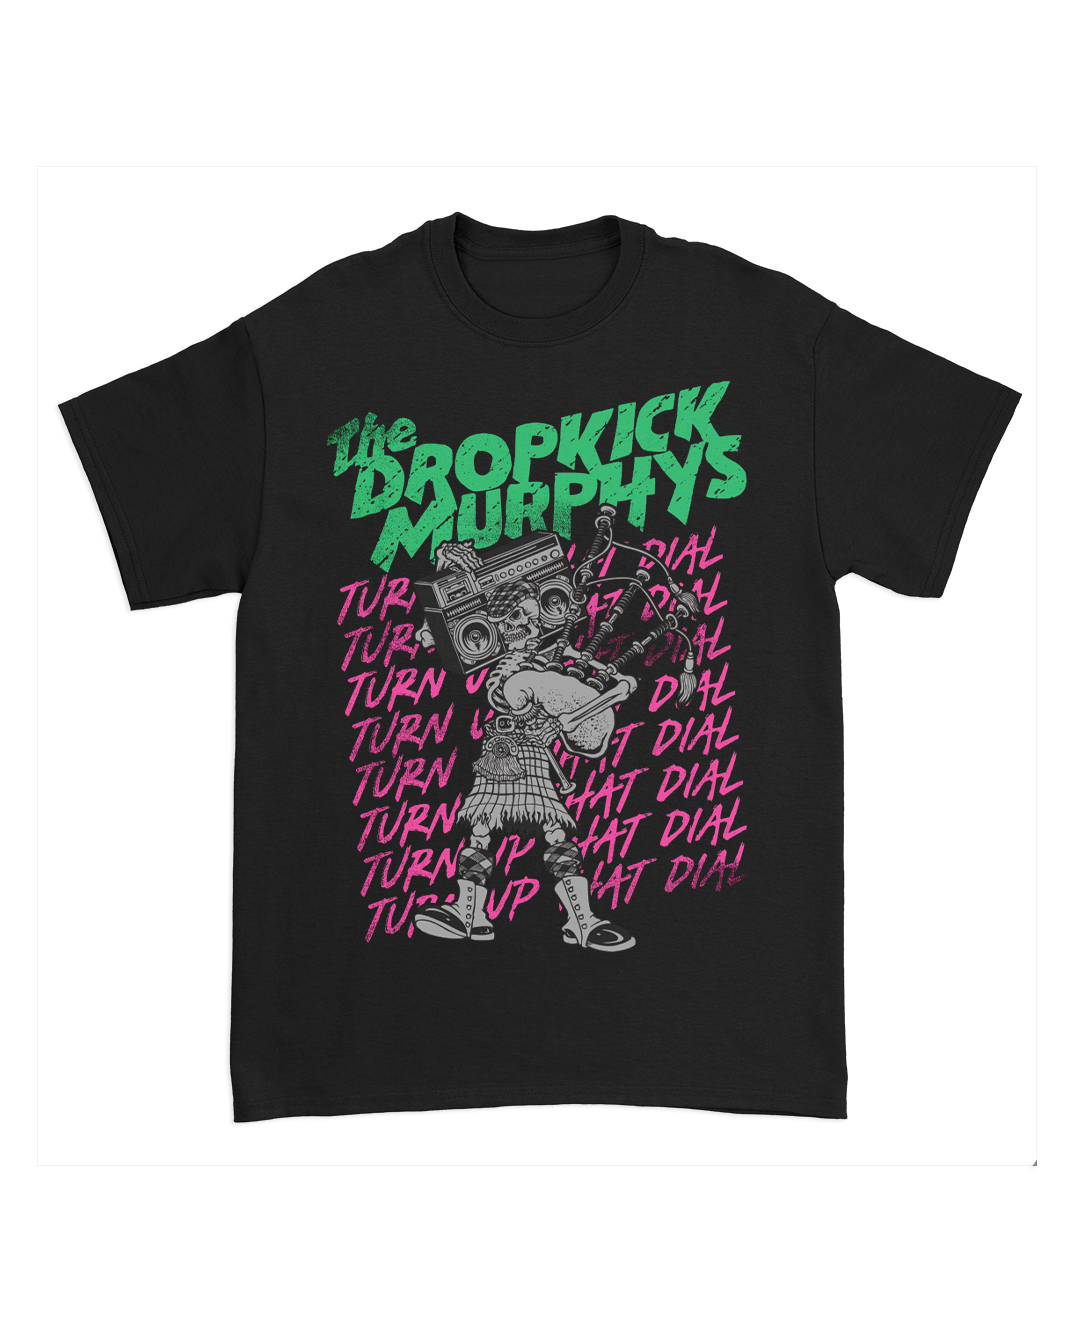 Dropkick Murphys Skelly Piper T-Shirt